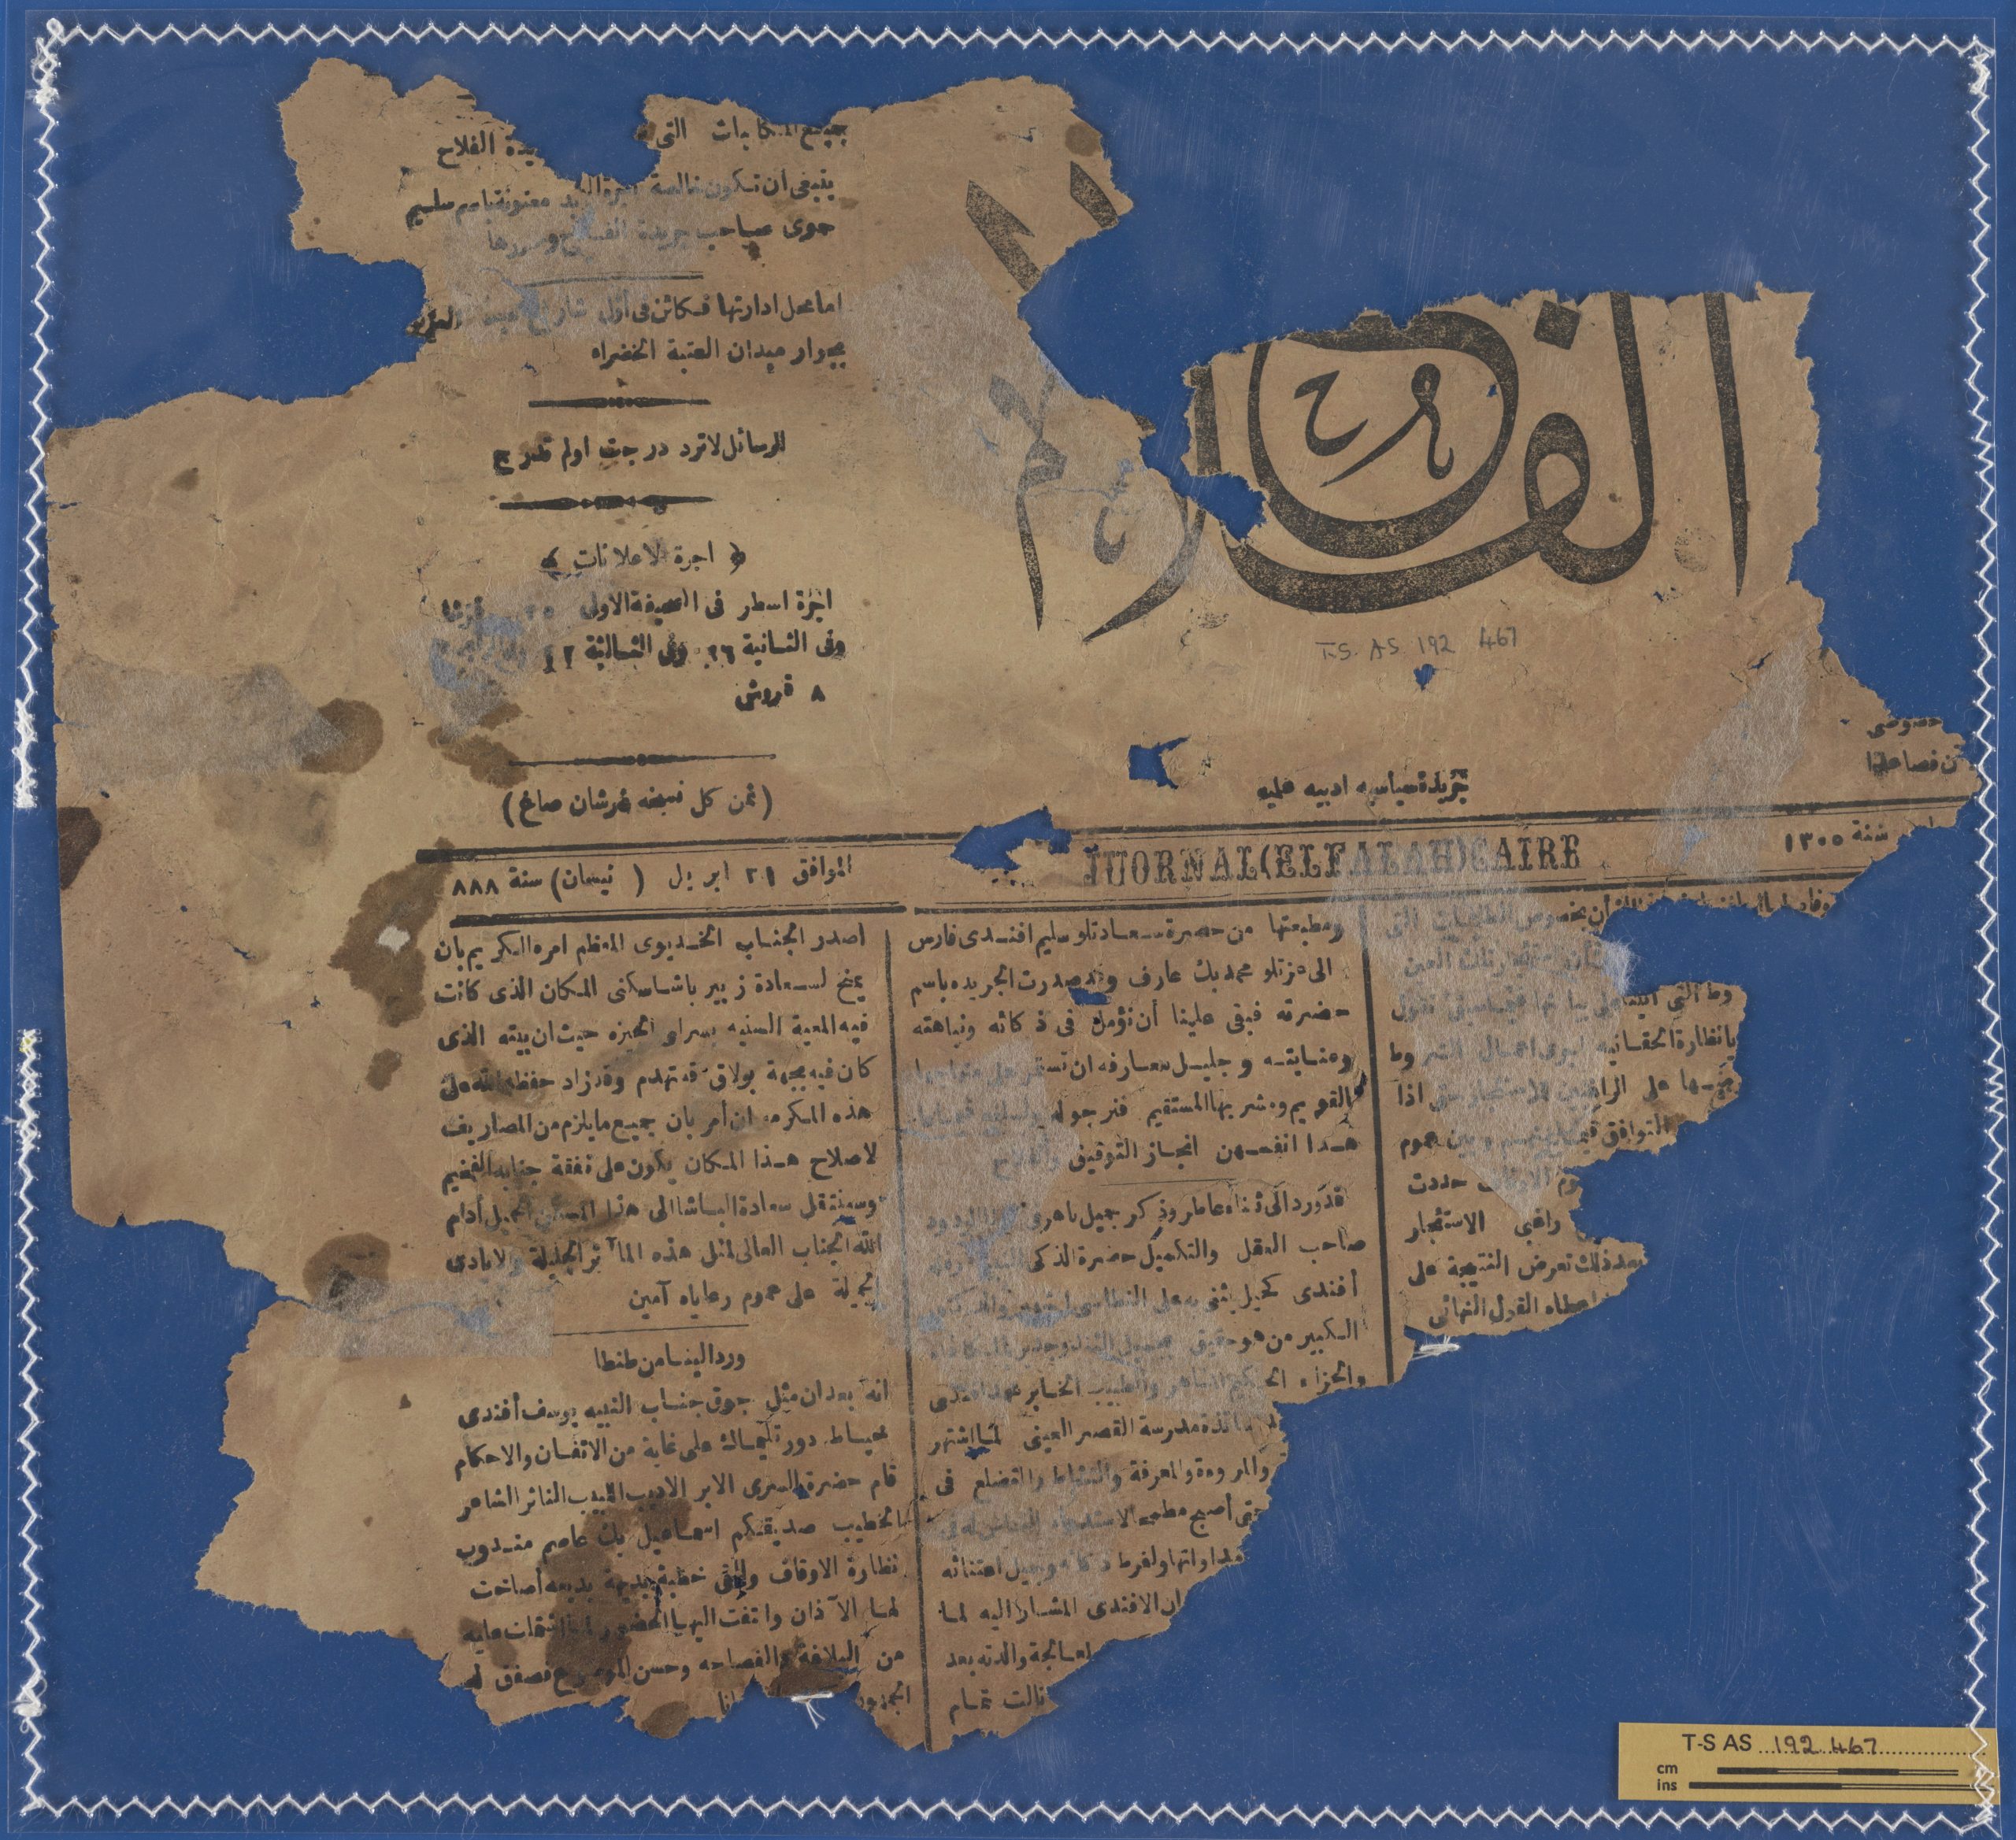 Cairo Genizah texts ‘could illuminate the history of late Ottoman Egypt’